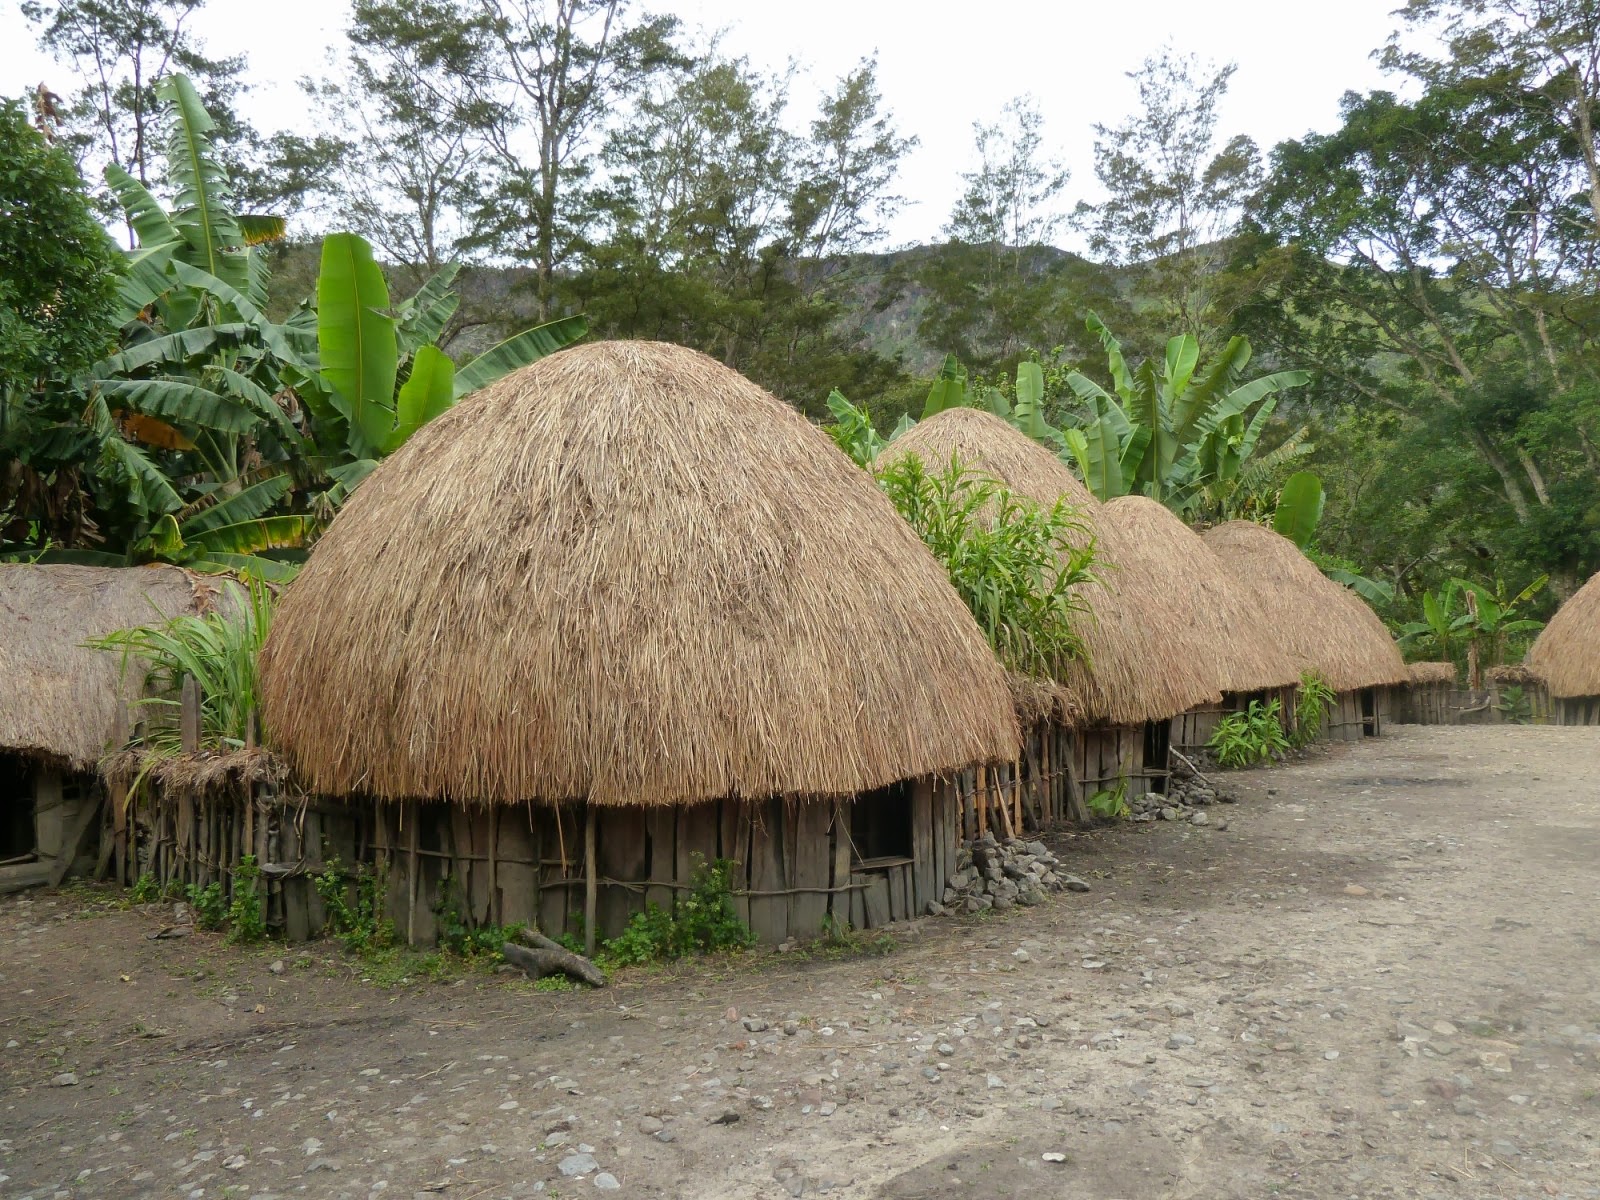  Honai traditional House Papua Unique Exotic Funny and 